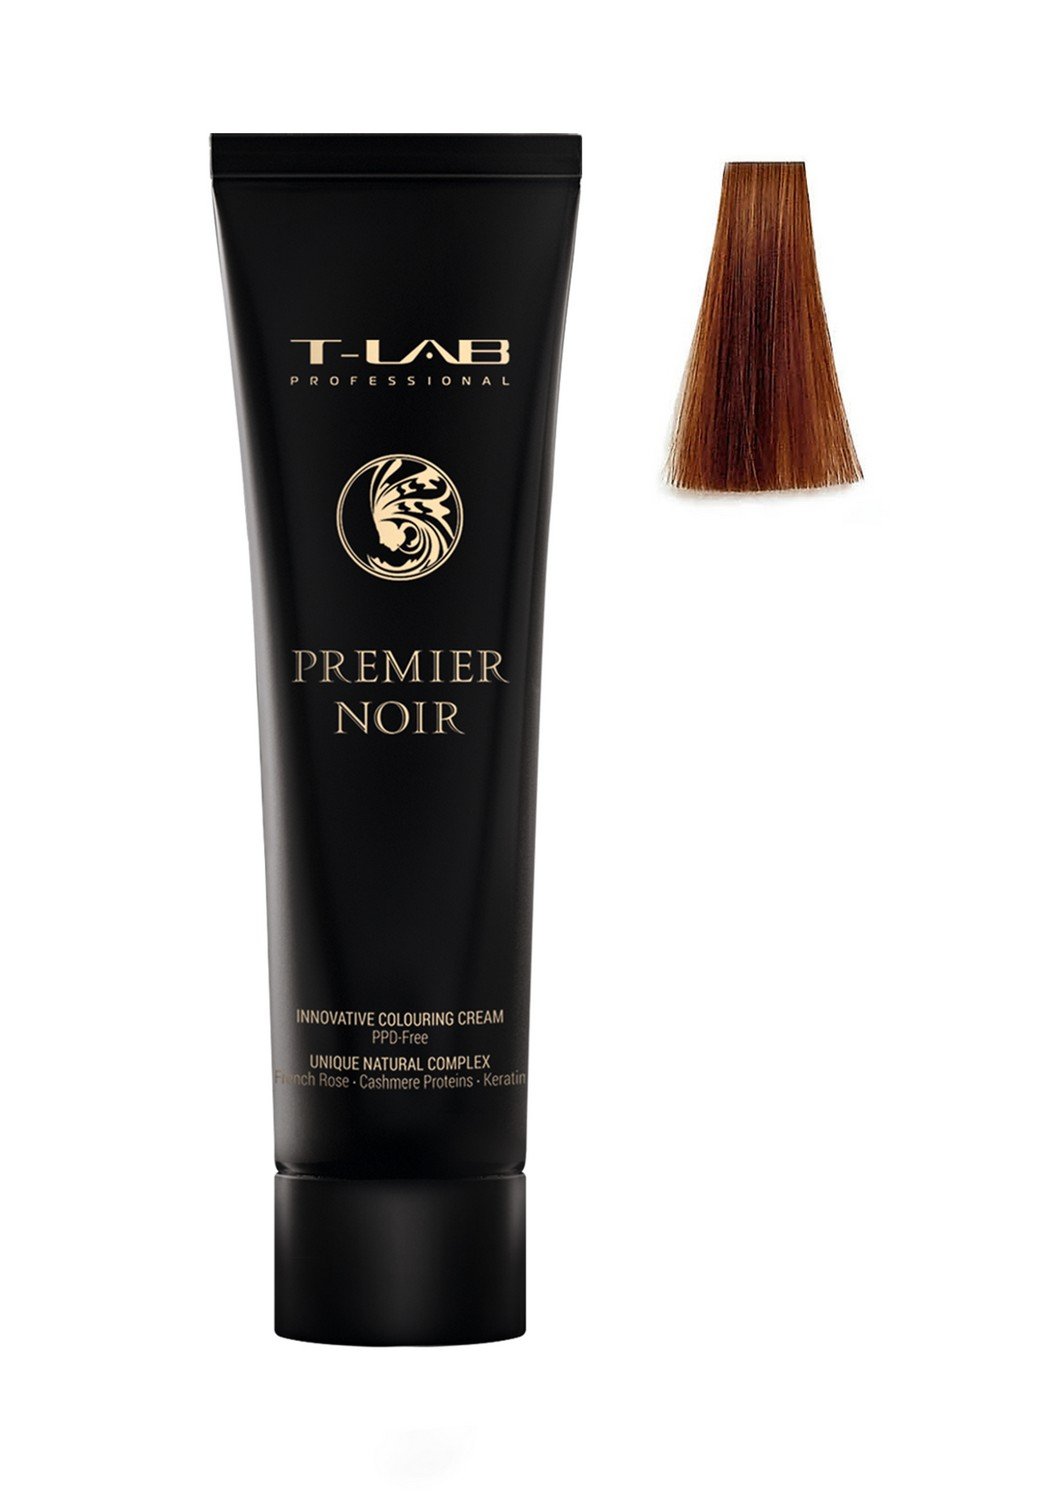 Крем-краска T-LAB Professional Premier Noir colouring cream, оттенок 7.43 (copper golden blonde) - фото 2